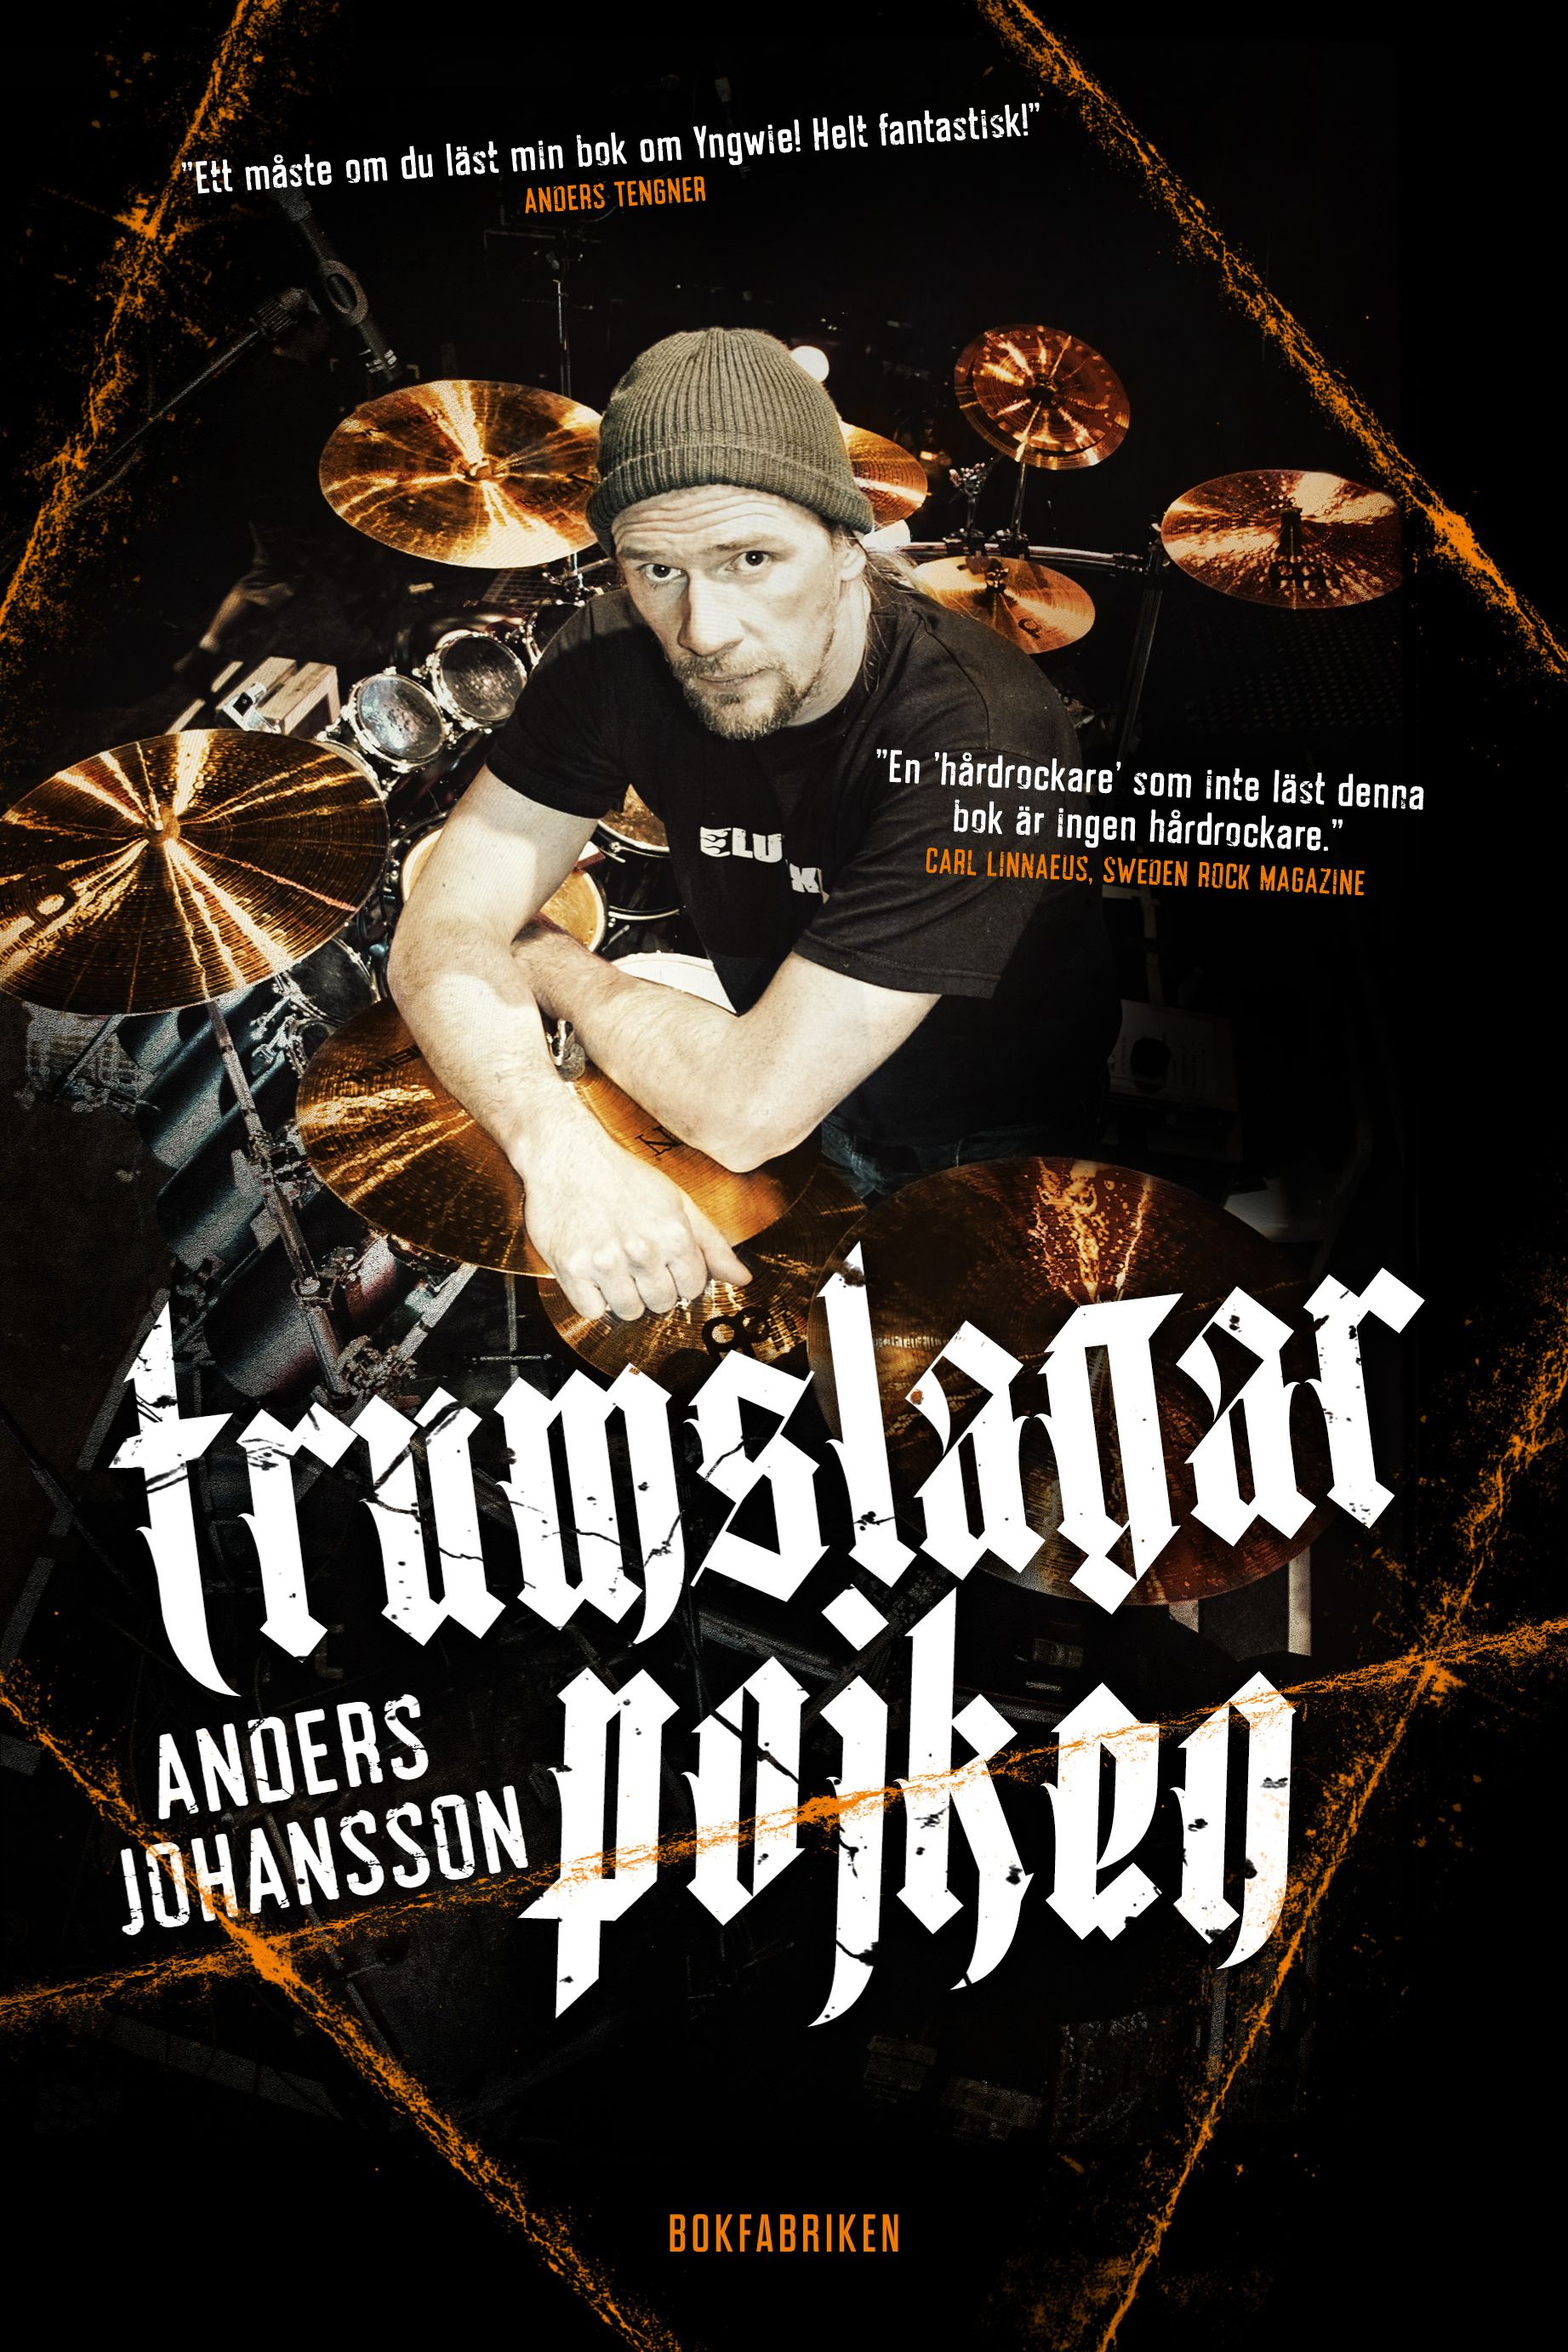 Trumslagarpojken, audiobook by Anders Johansson